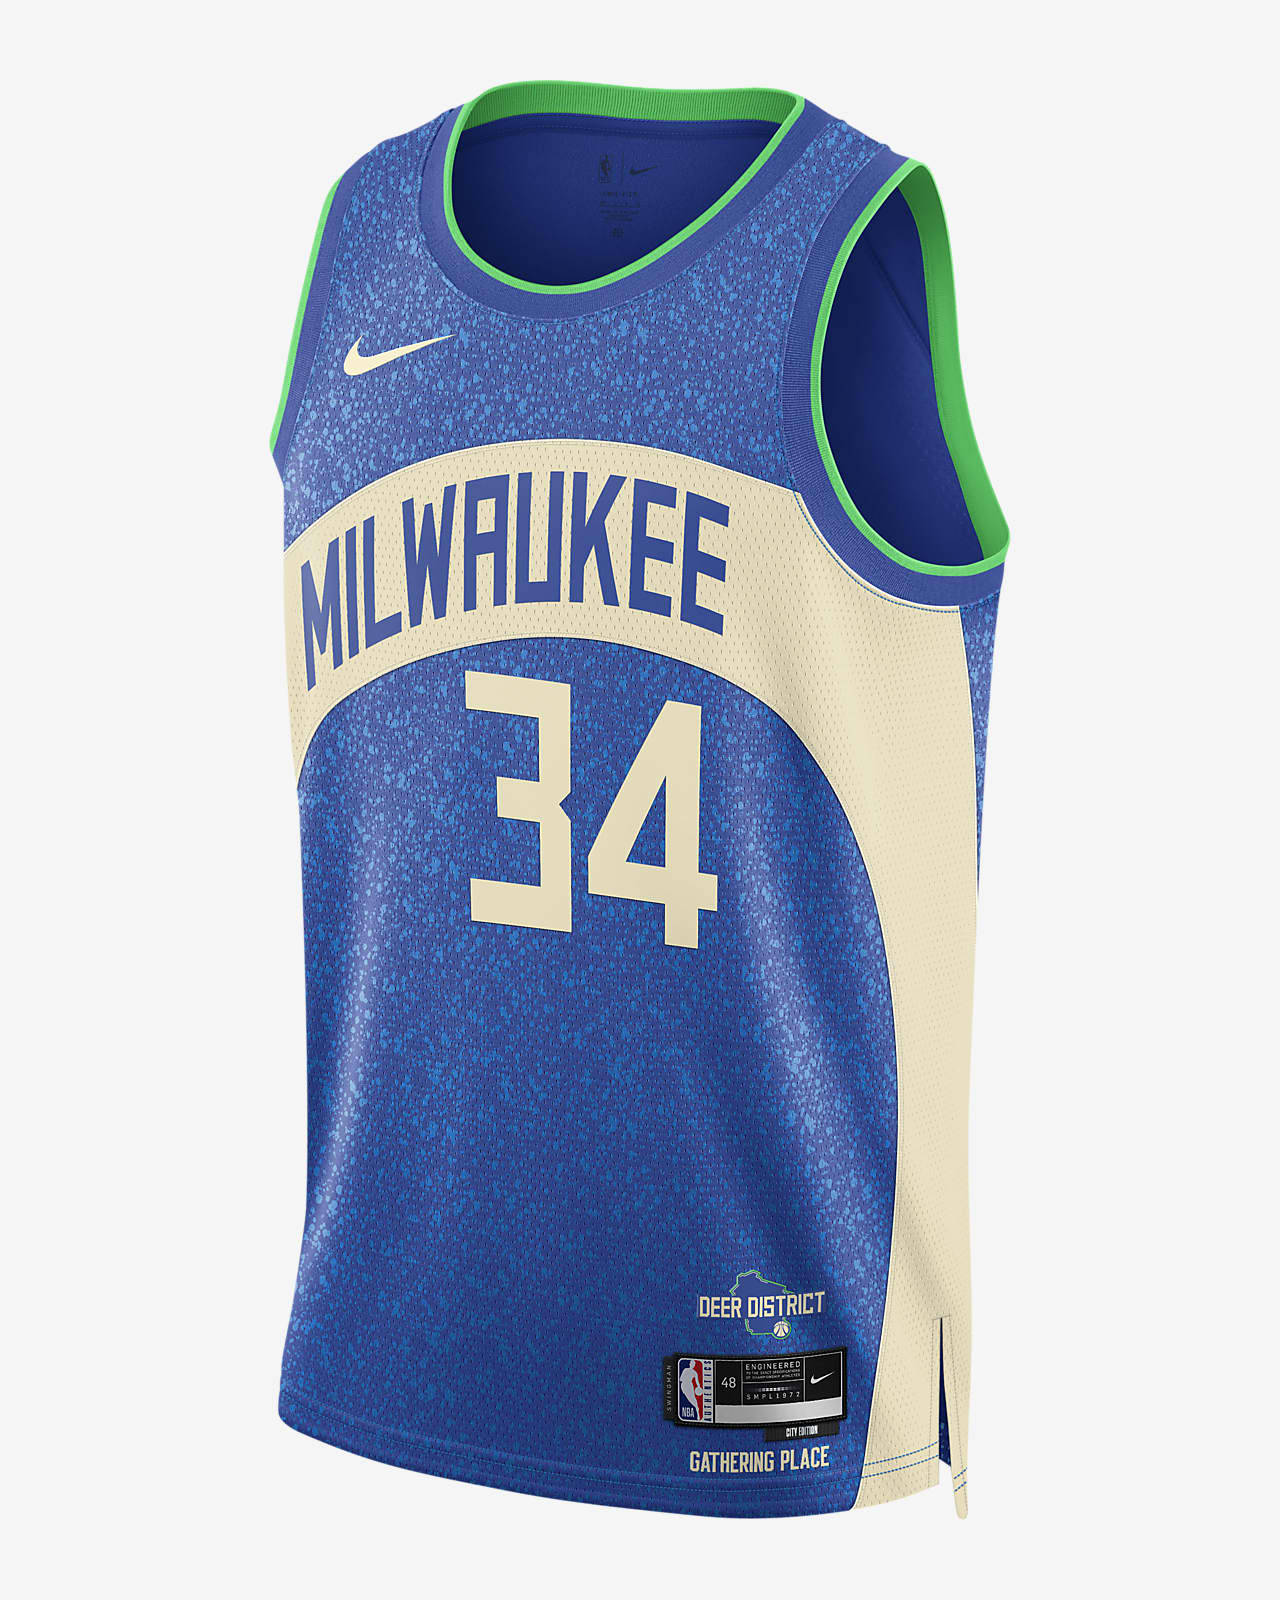 NBA Milwaukee Bucks Men's Hoodie #34 Giannis Antetokounmpo Nike Sweatshirt